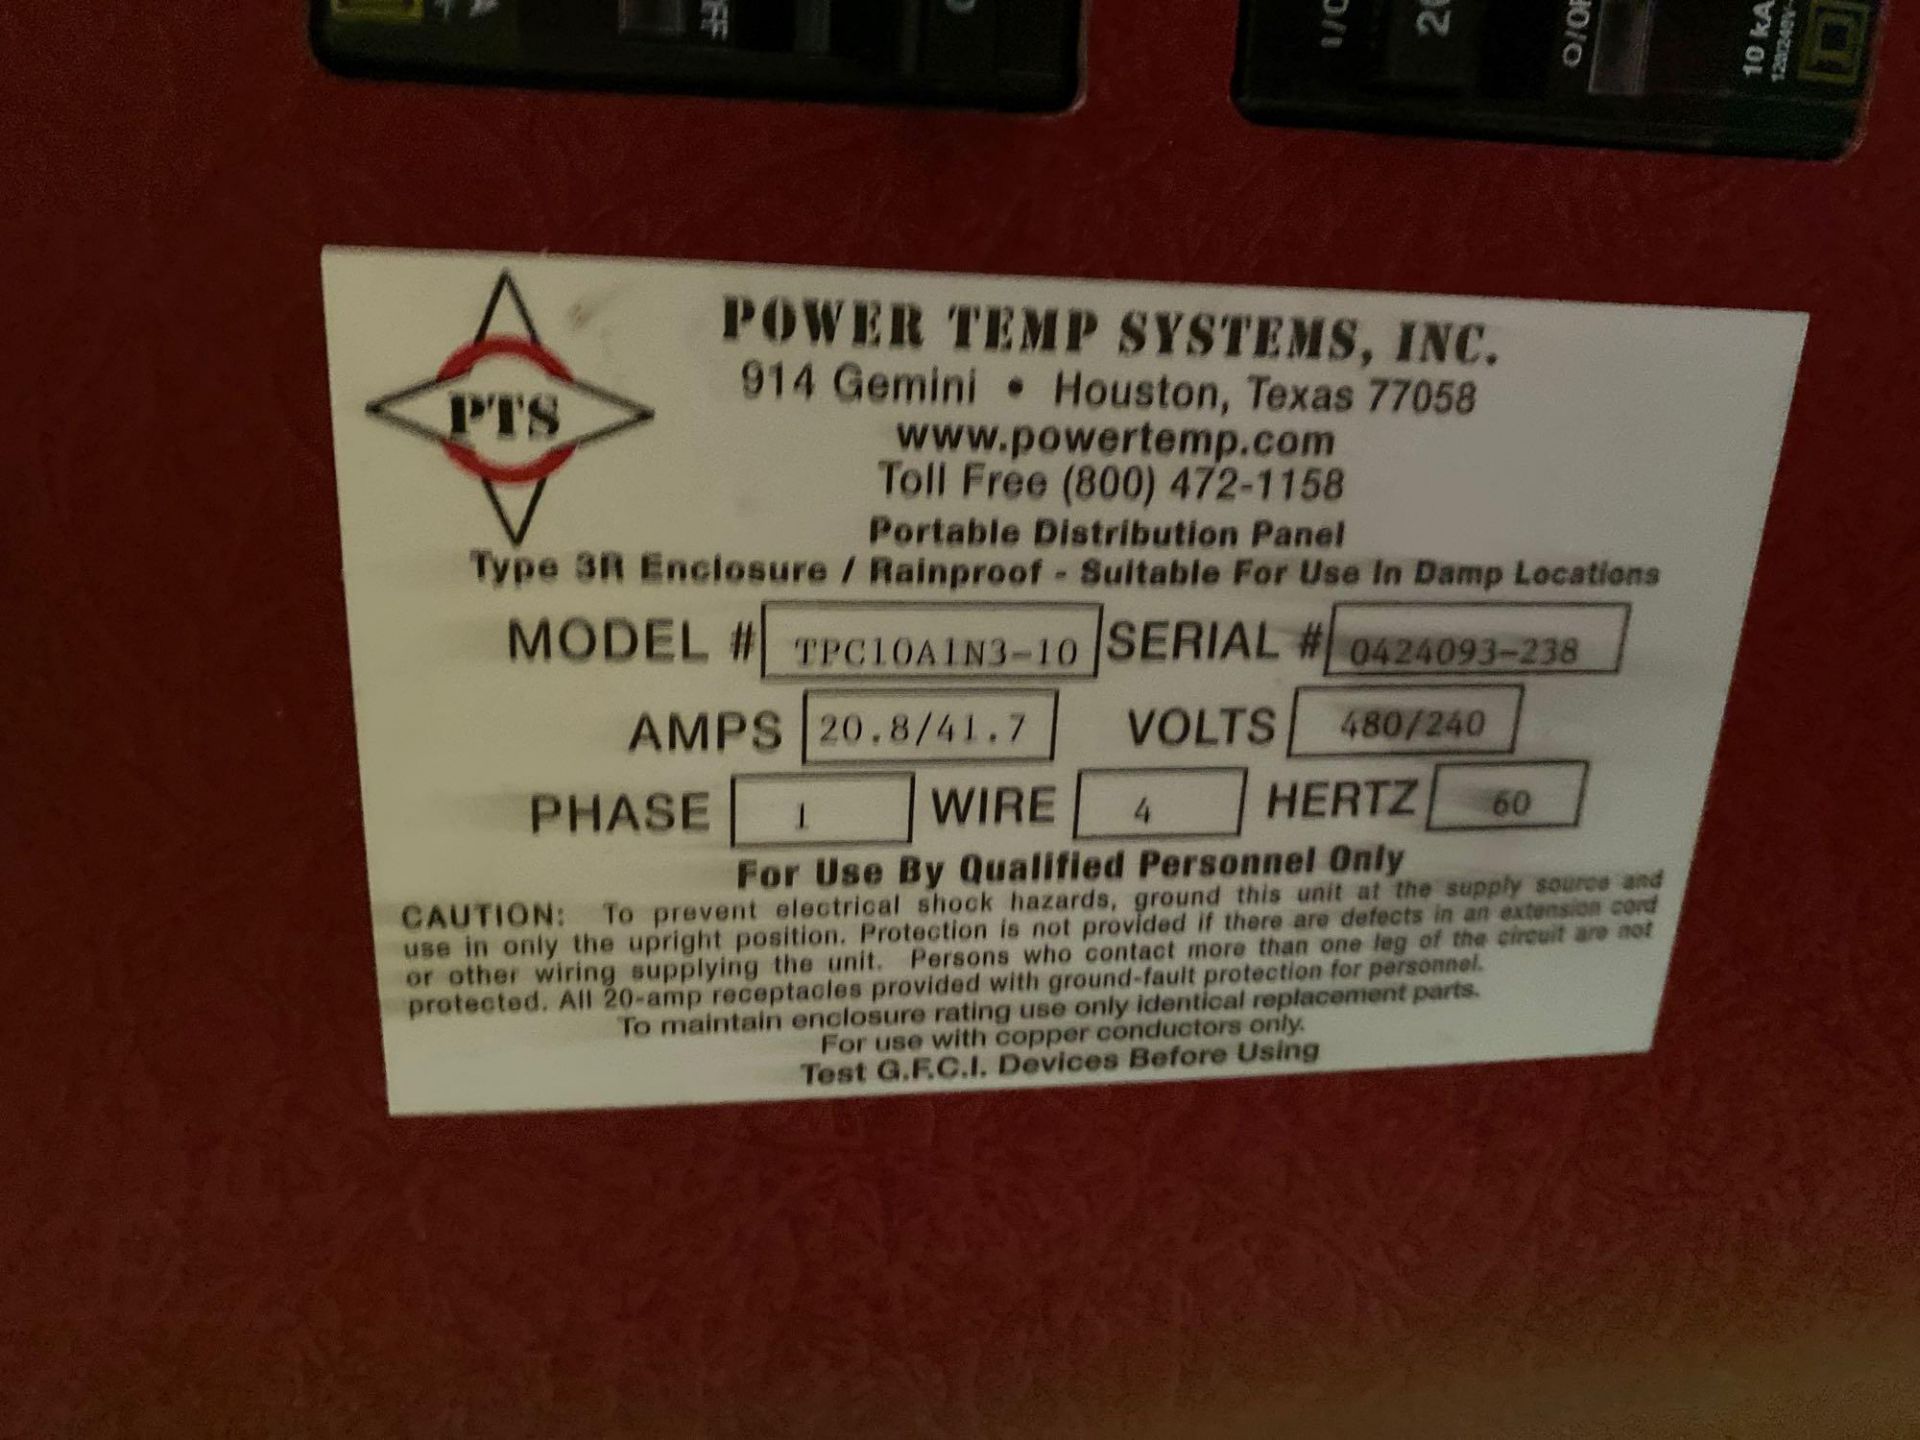 POWER TEMP SYSTEMS PORTABLE POWER DISTRIBUTION CENTER, 20.8/41.7 AMP, SINGLE PHASE, 60 HERTZ - Image 9 of 12